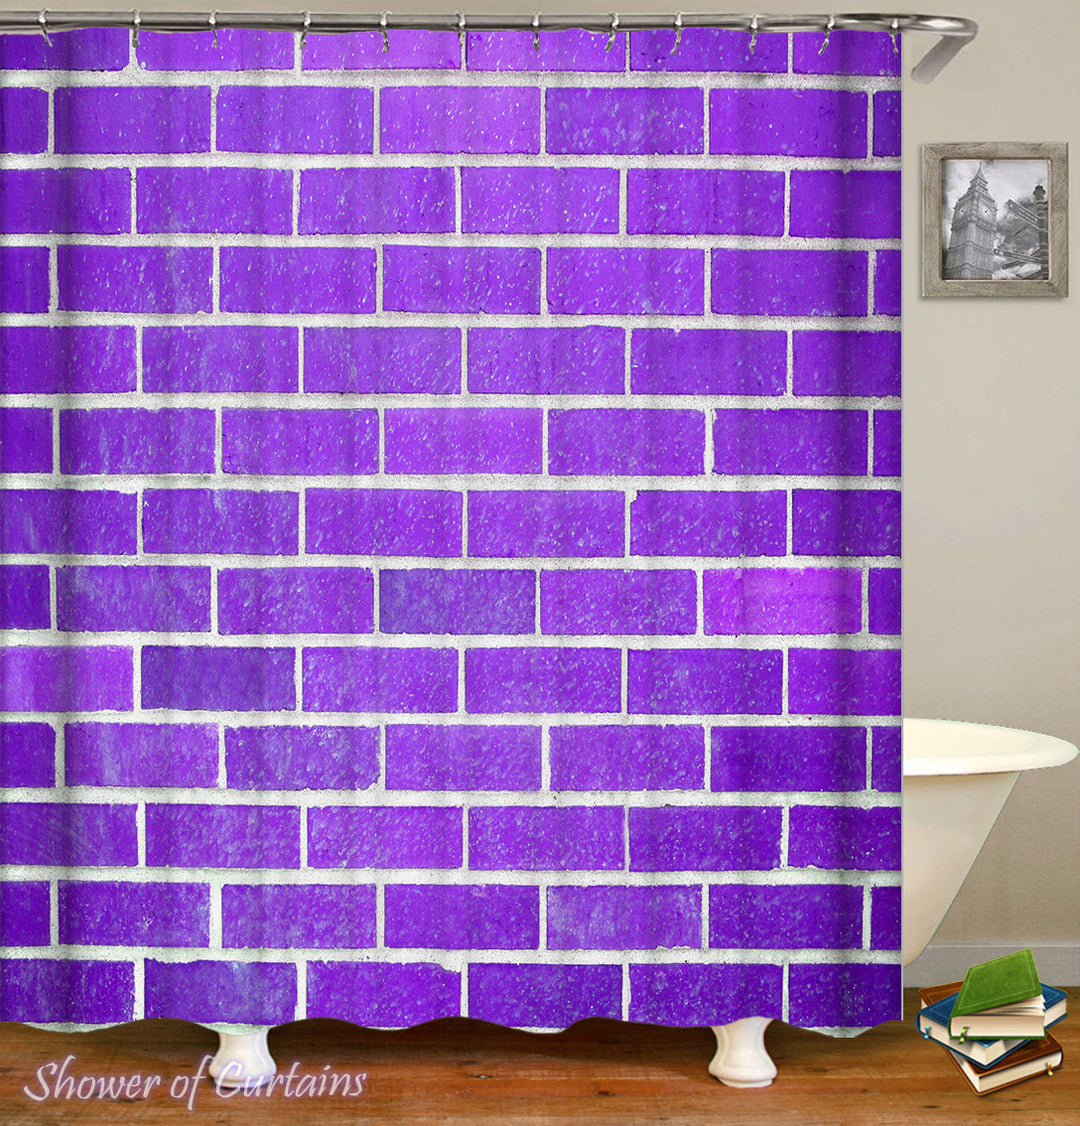 Purple Shower Curtain Blog Post Logo - of Purple Brick Wall